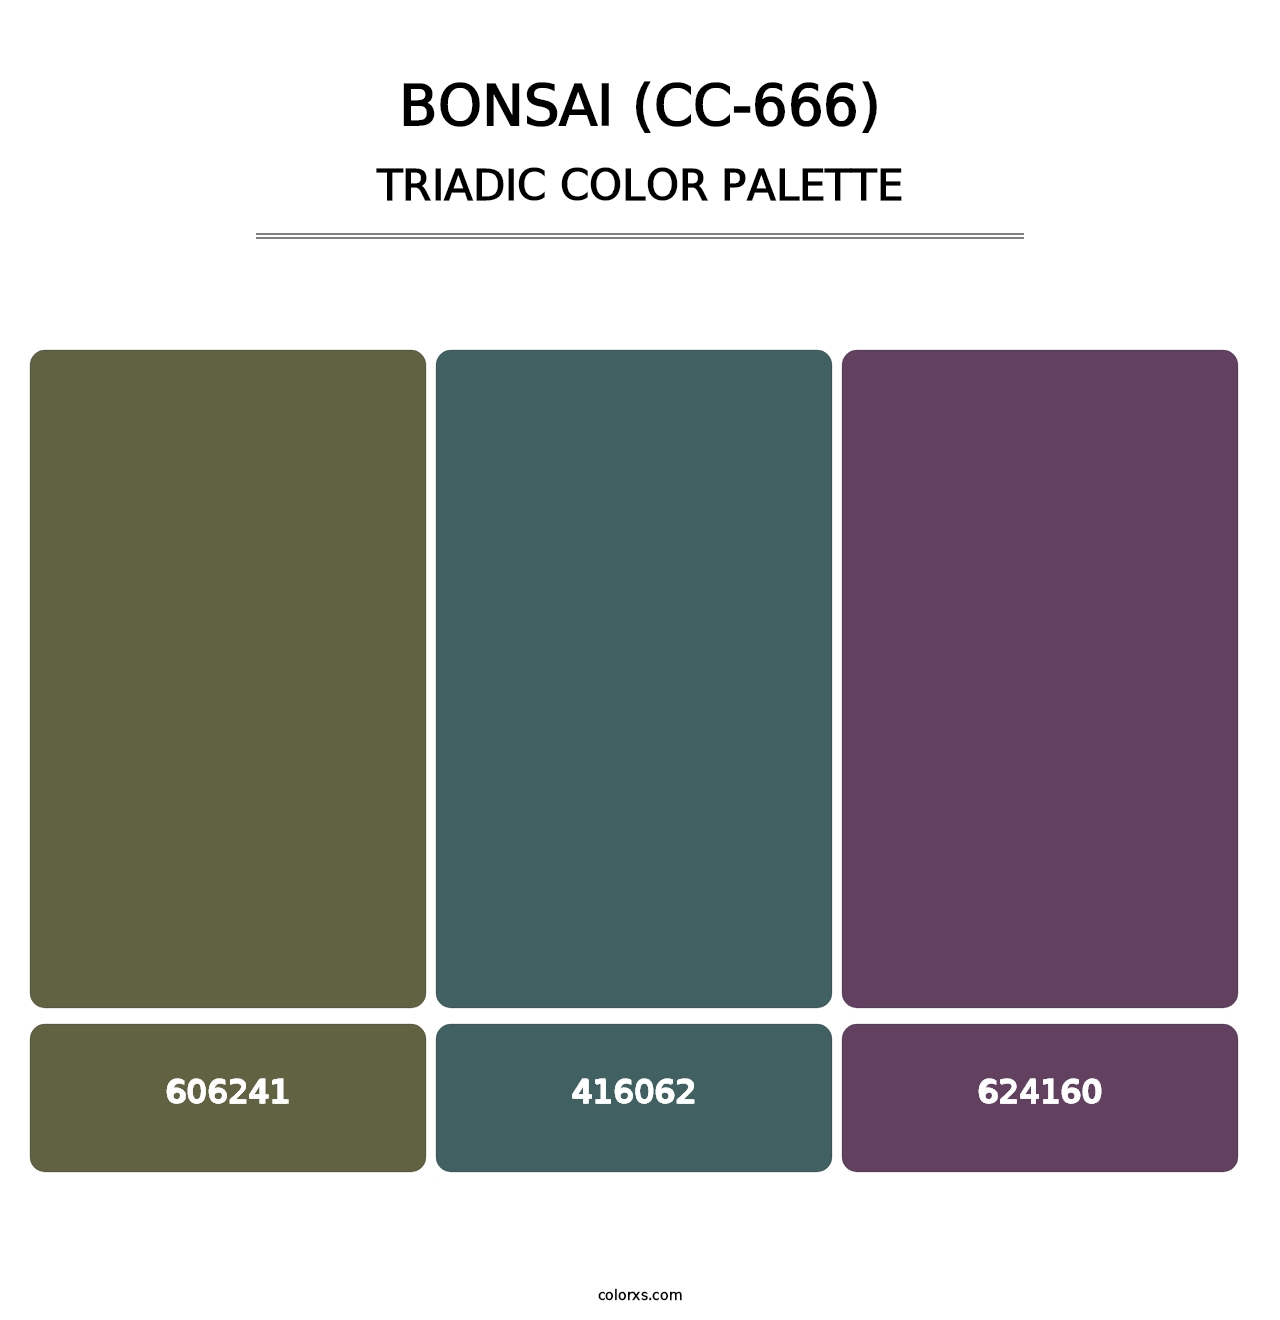 Bonsai (CC-666) - Triadic Color Palette